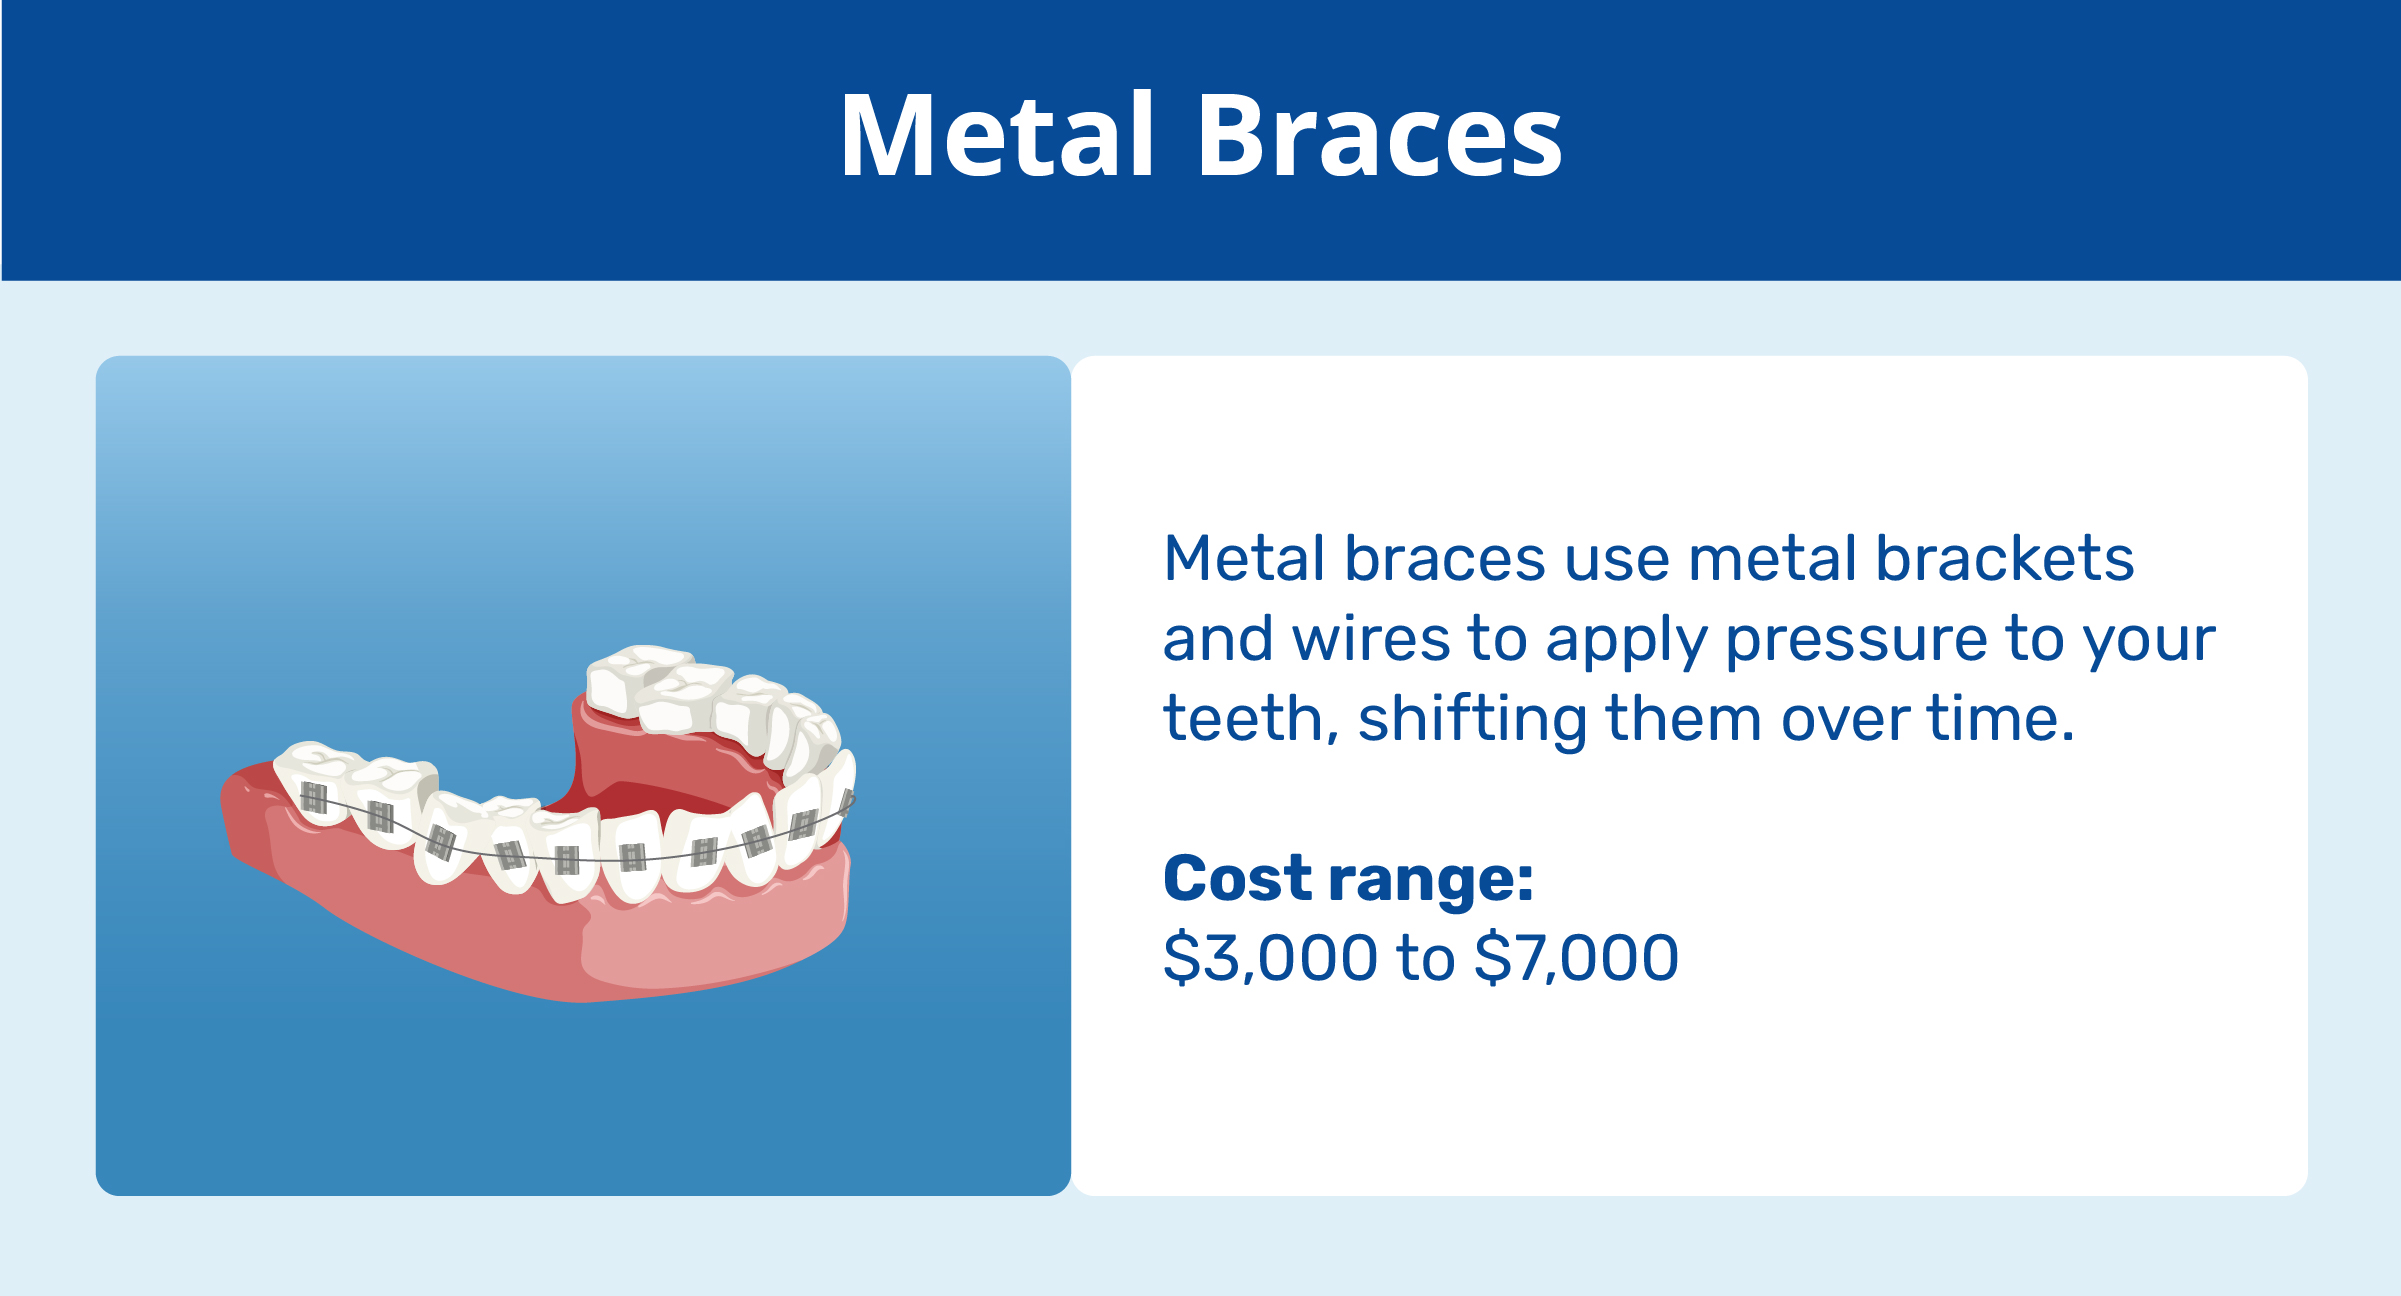 metal braces and cost range